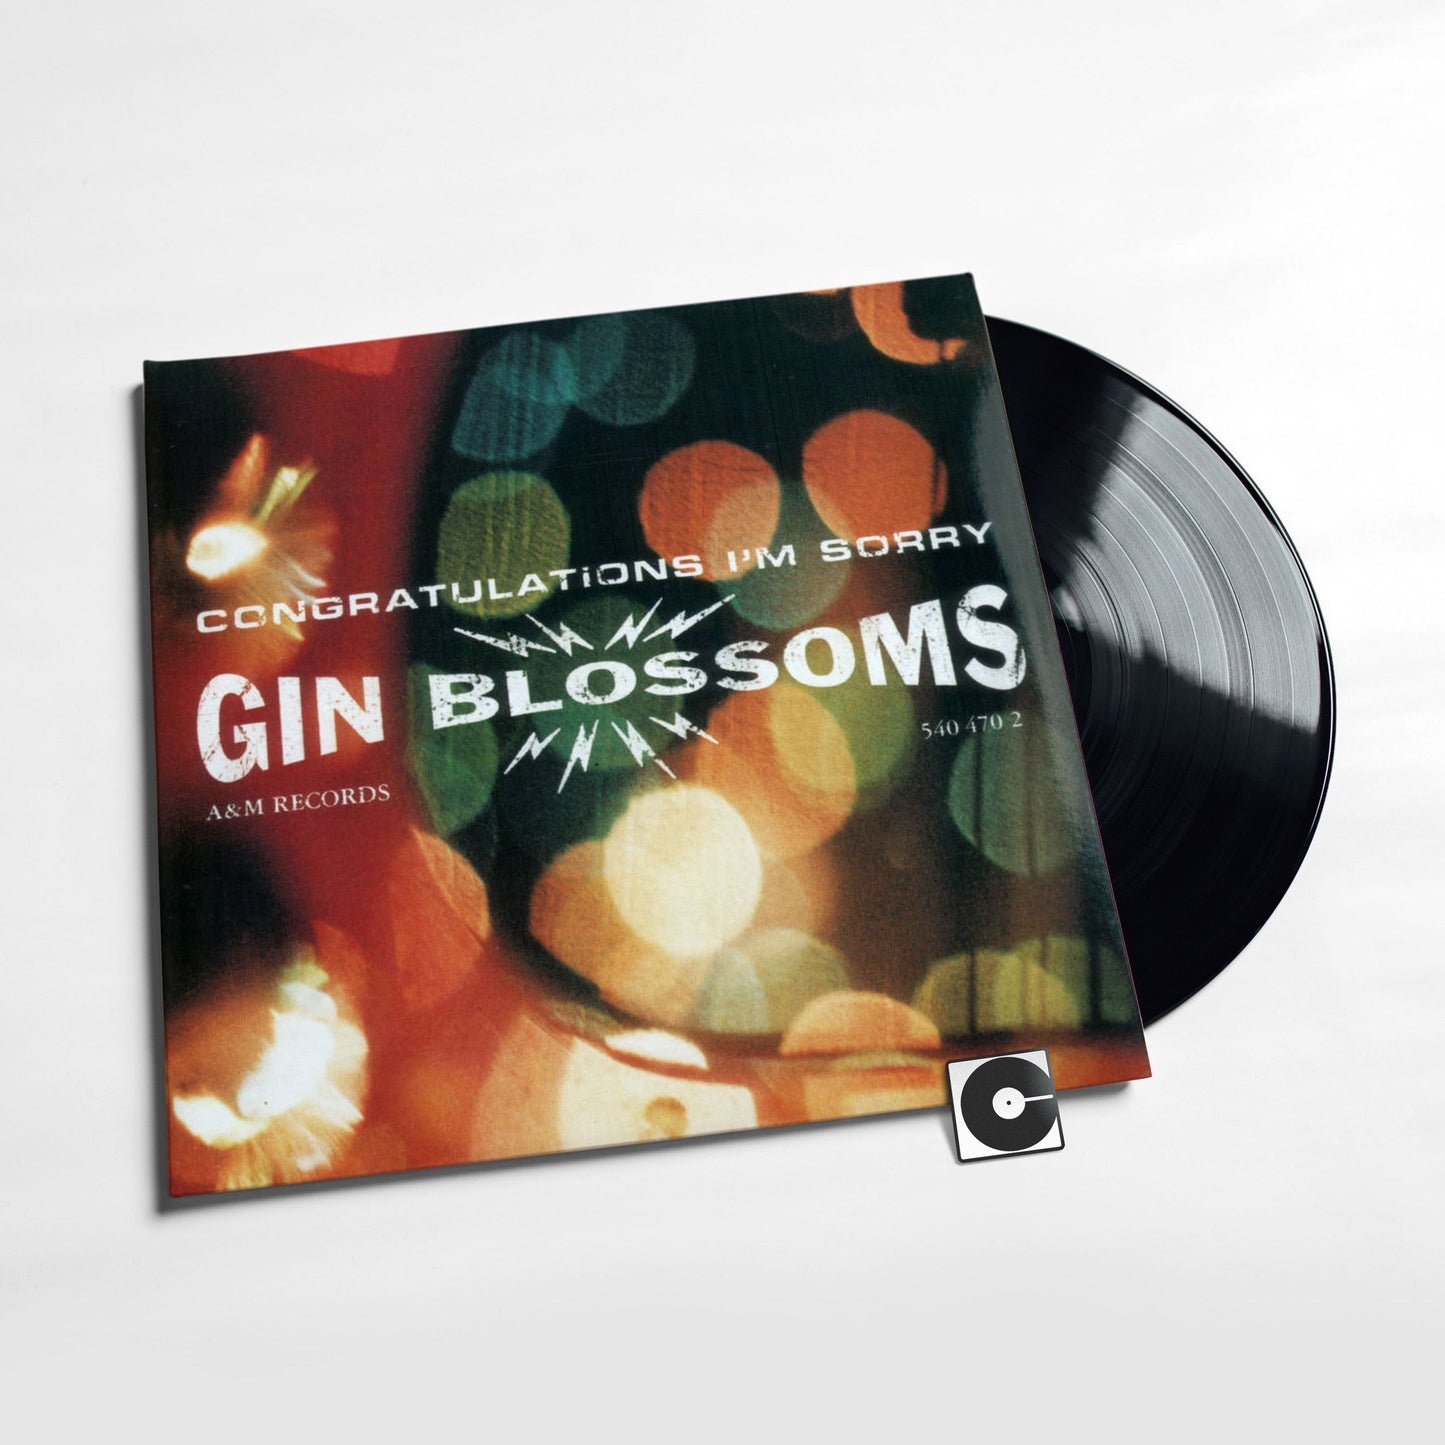 Gin Blossoms - "Congratulations I'm Sorry"